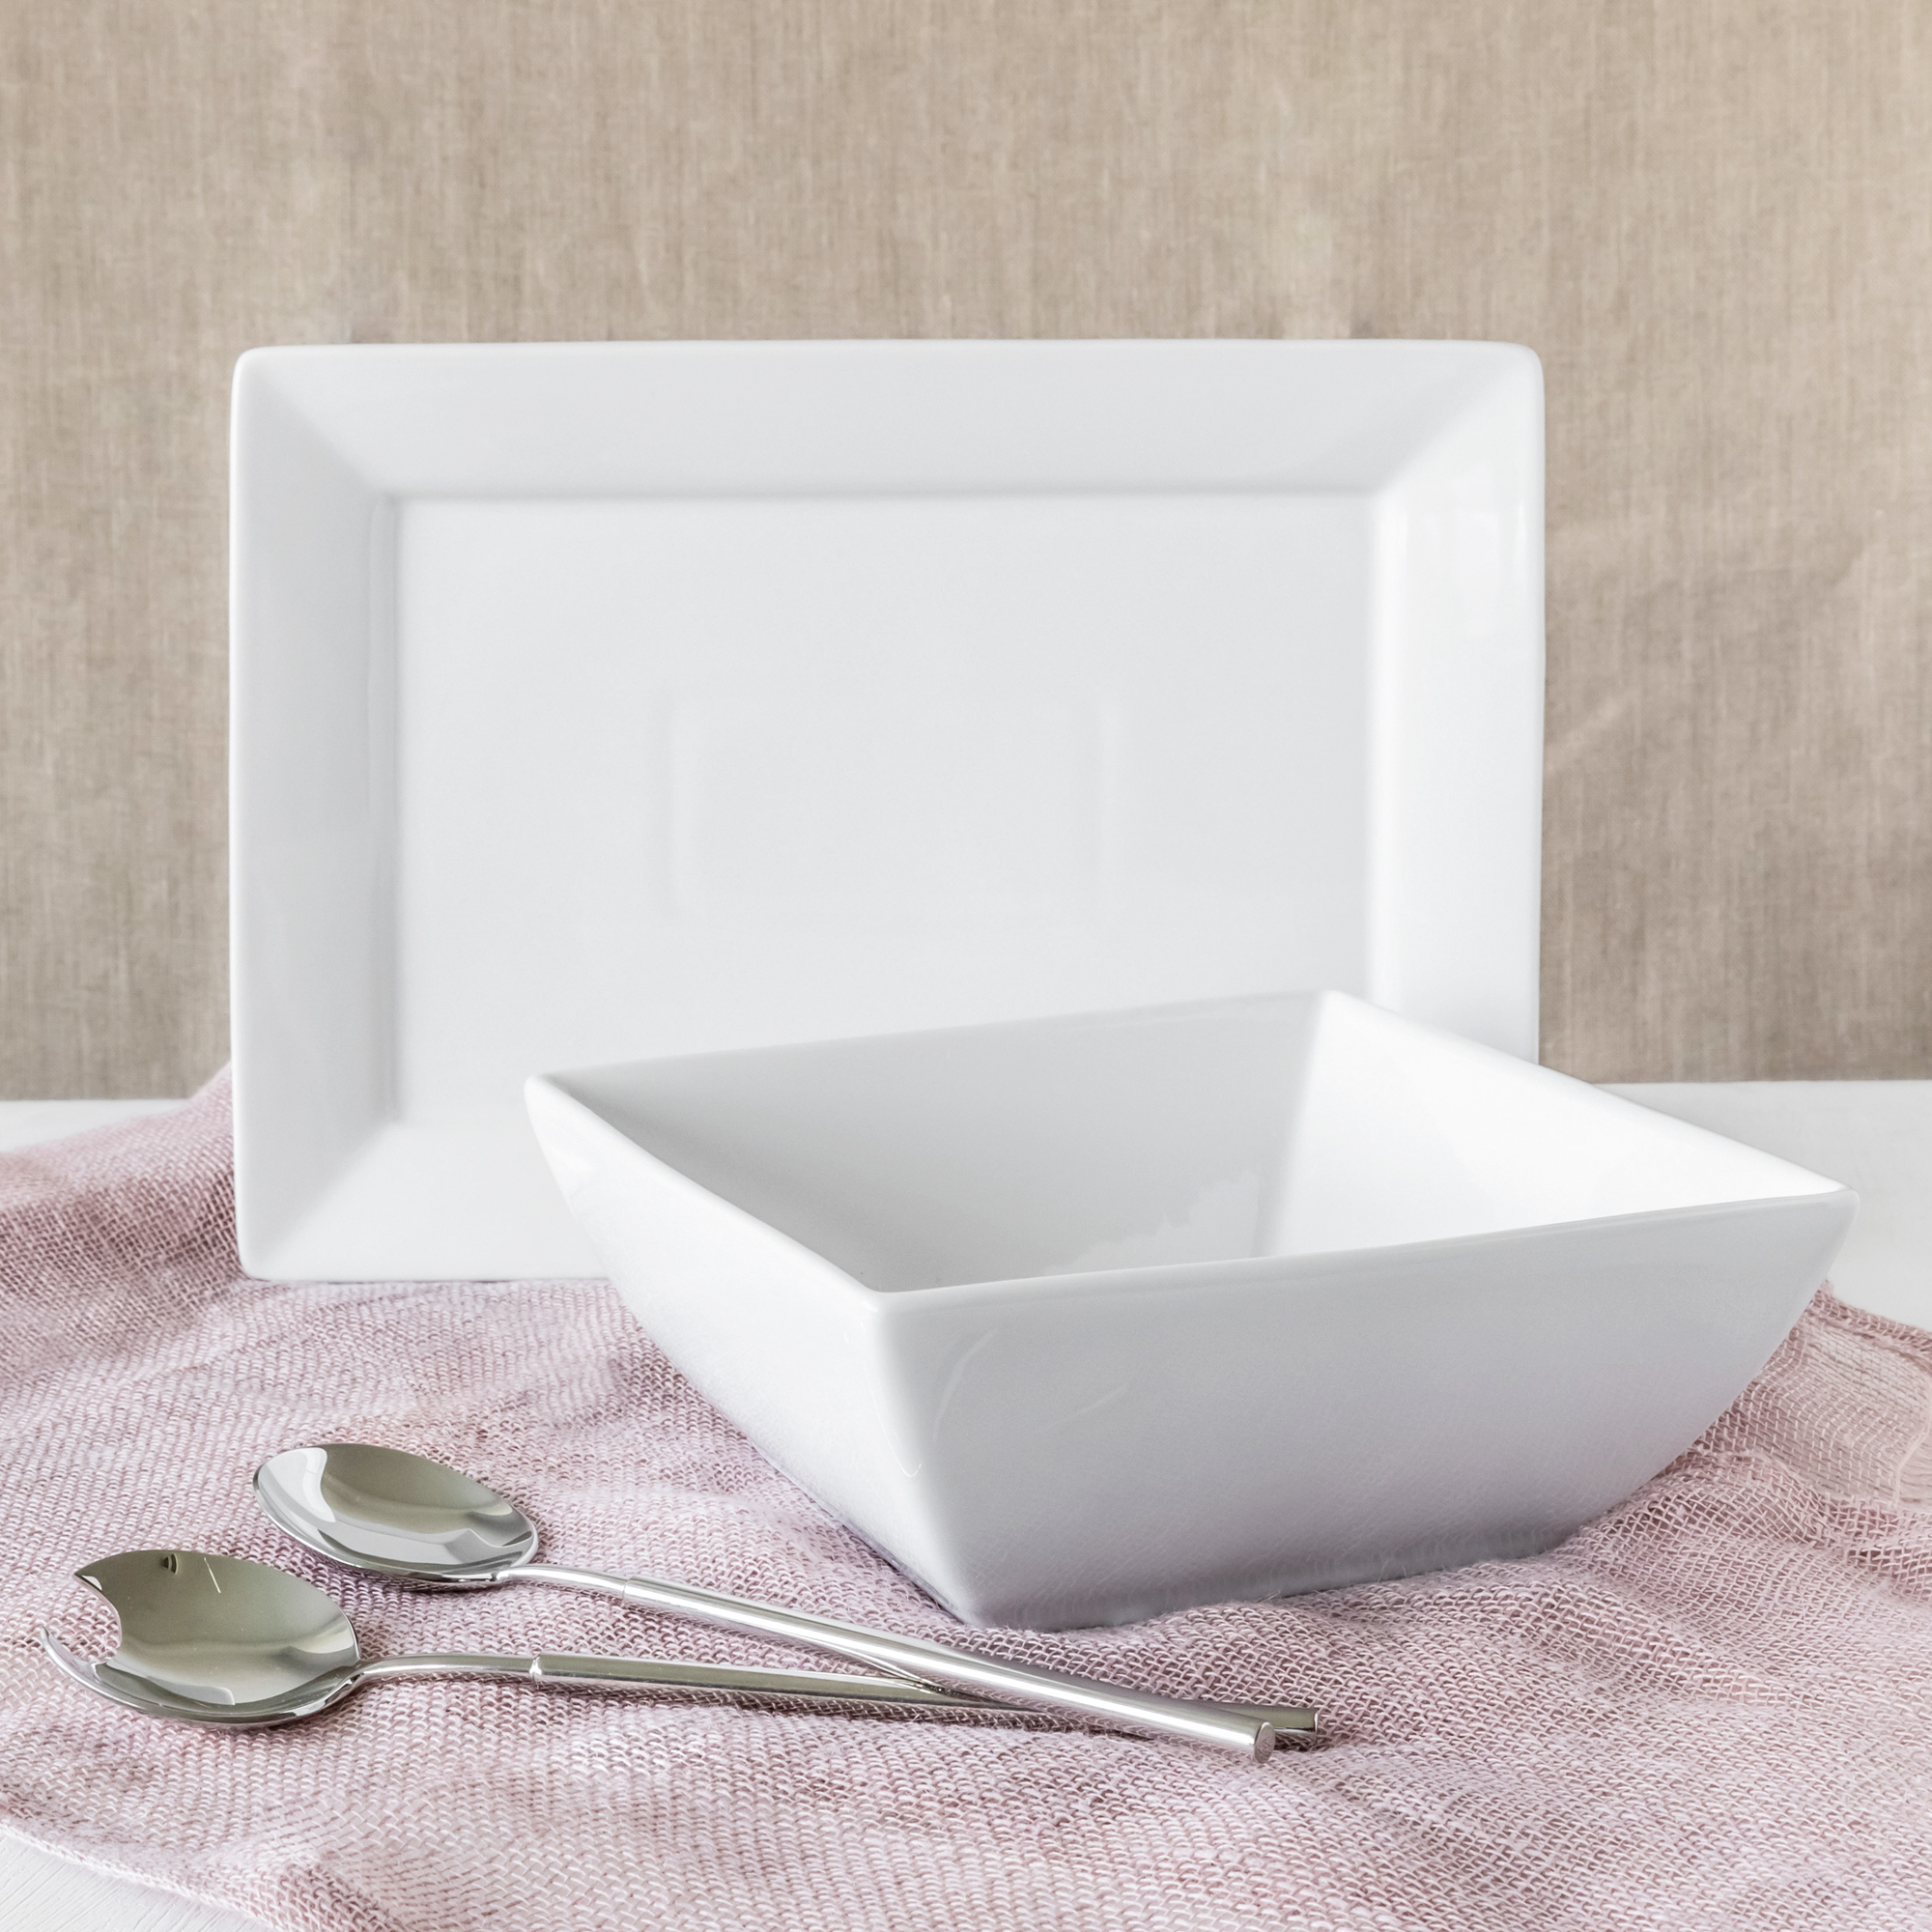 Better Homes & Gardens Porcelain Square Bowl and Platter Set, White - image 1 of 7